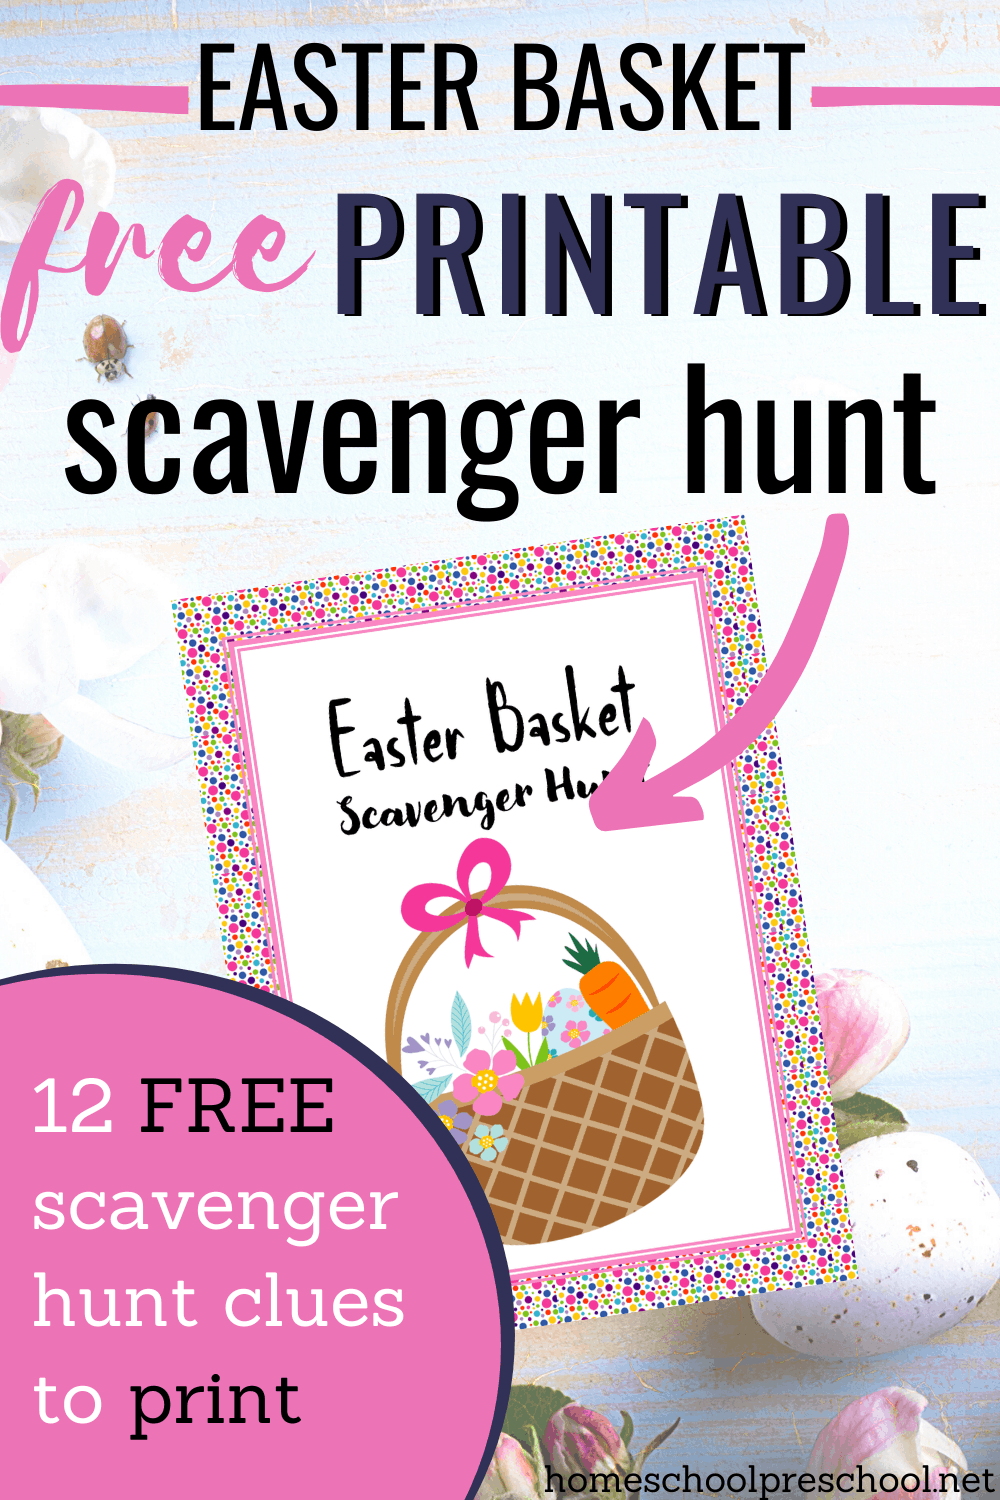 This Easter, make memories by sending your kids on an Easter Egg Scavenger Hunt! Free printable scavenger hunt clues make it easy!